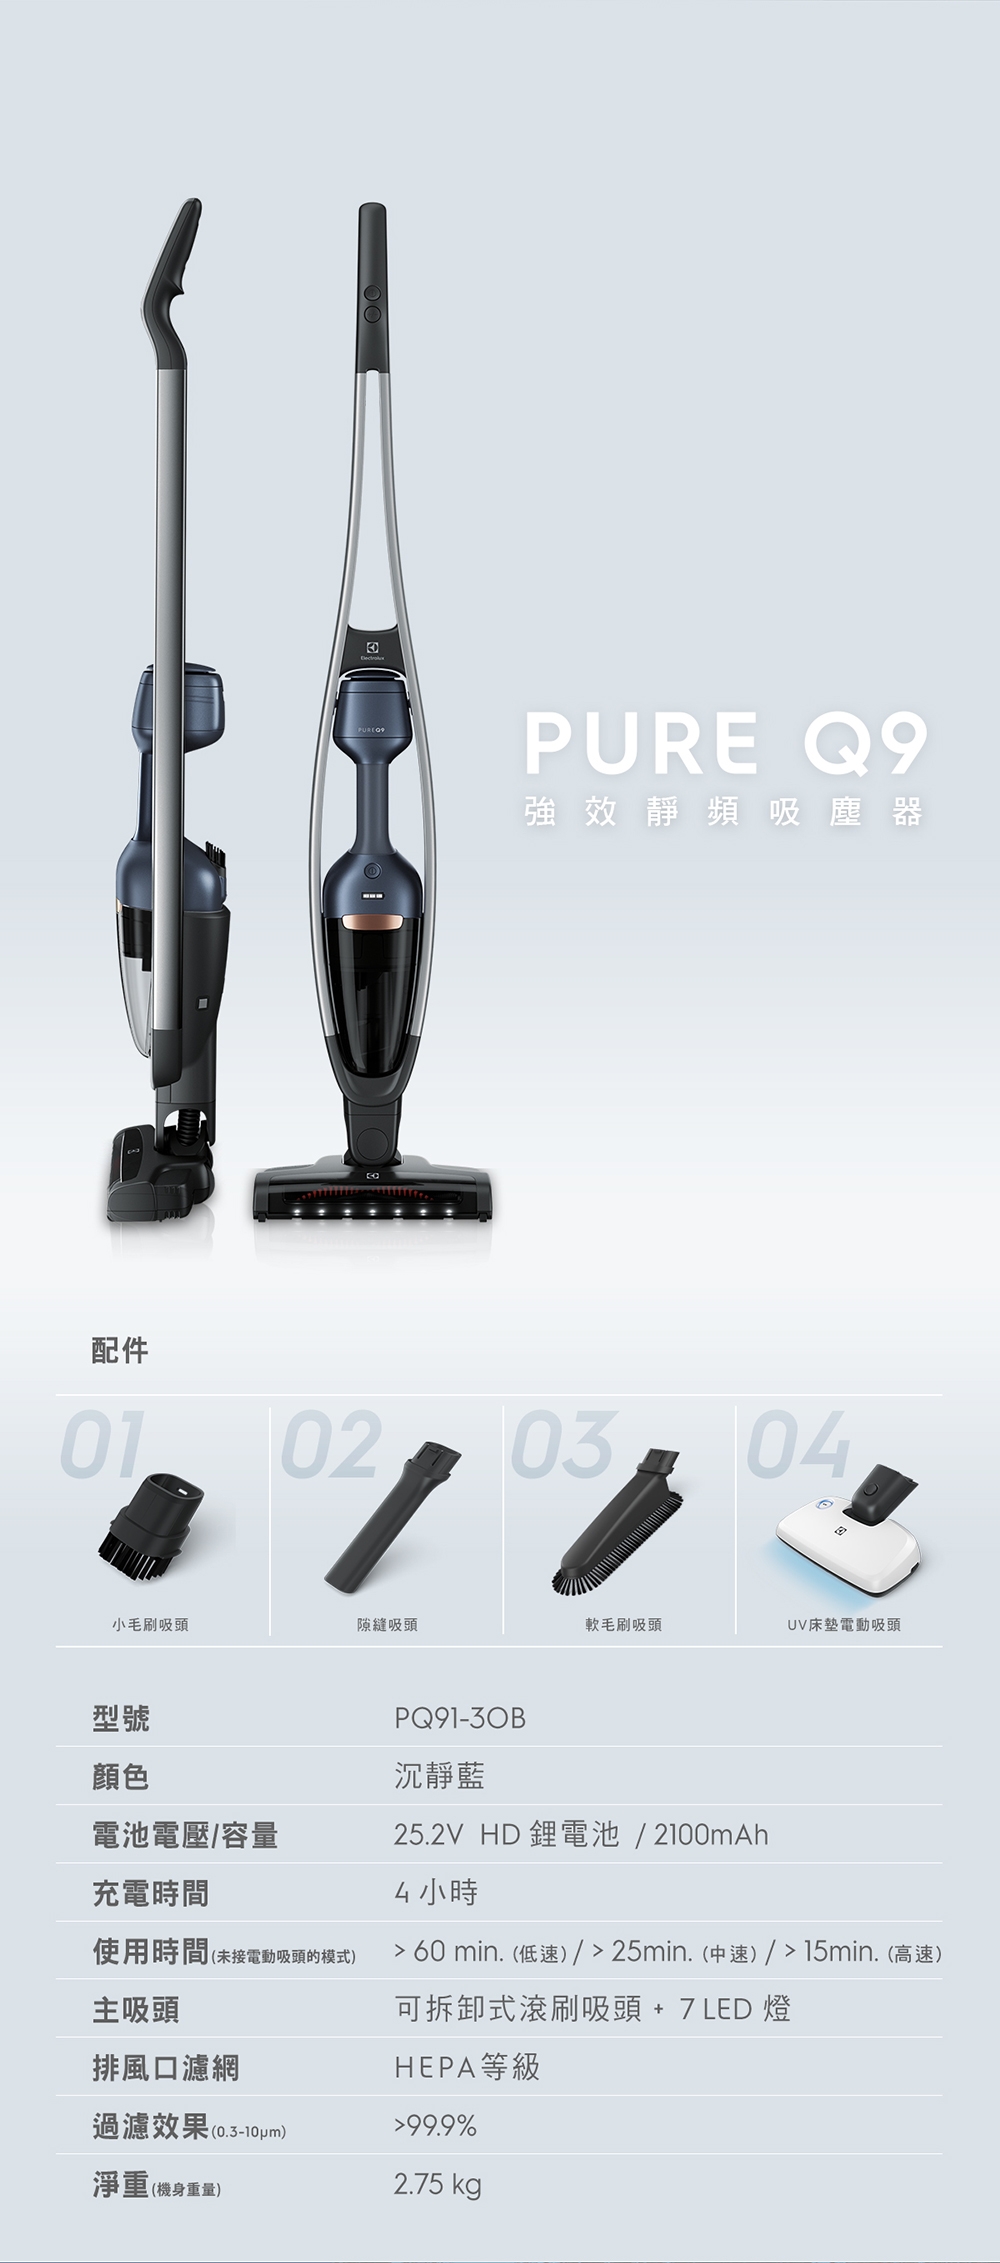 Electrolux 伊萊克斯強效靜頻吸塵器Pure Q9(PQ91-3OB)